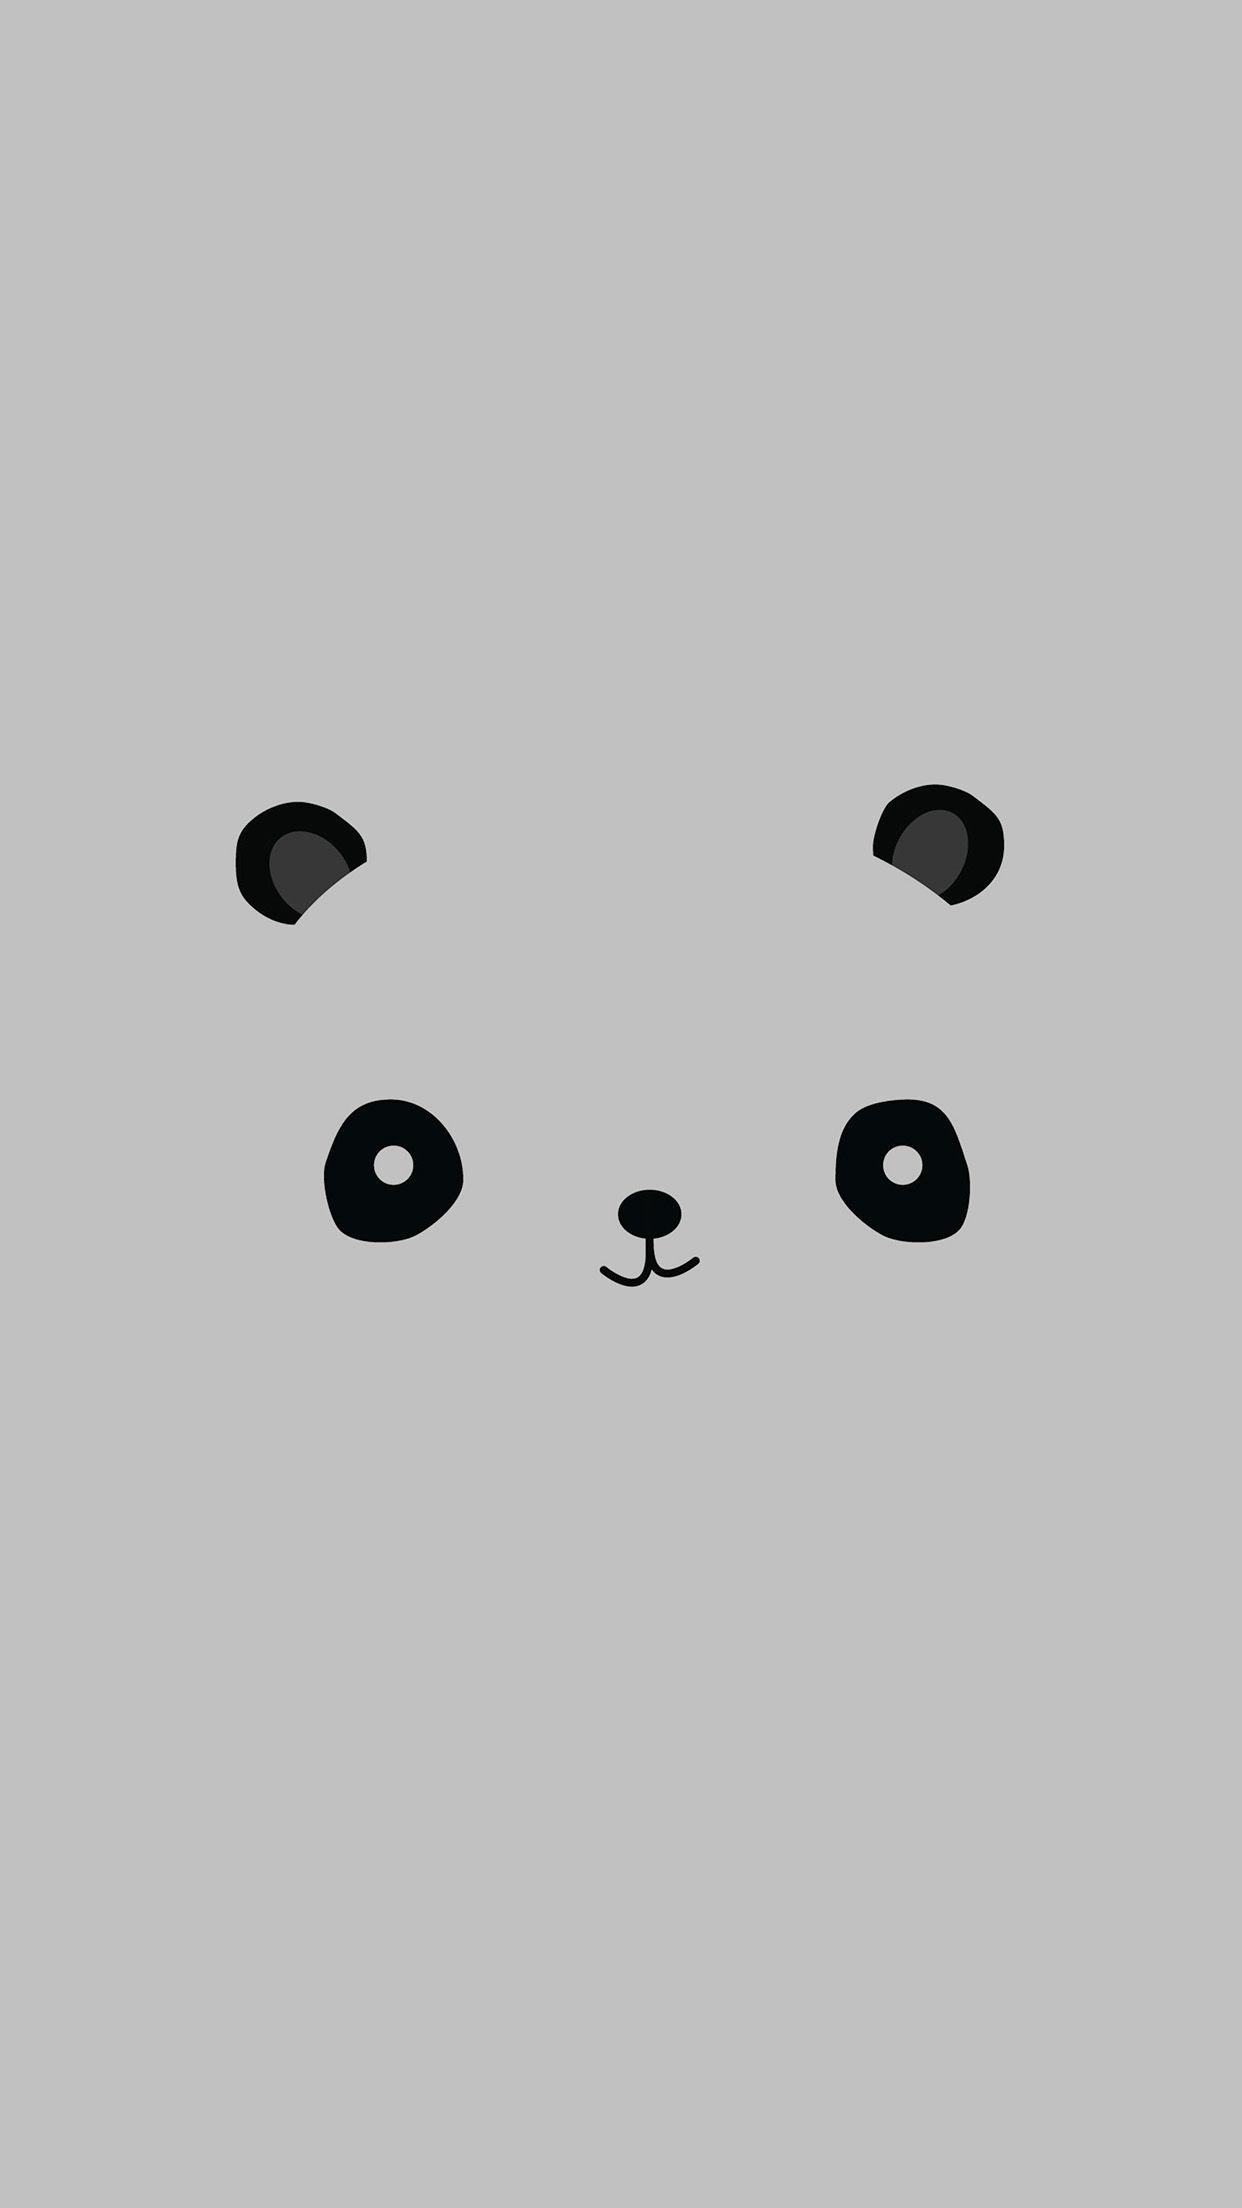 Minimal Panda Android Wallpaper free download